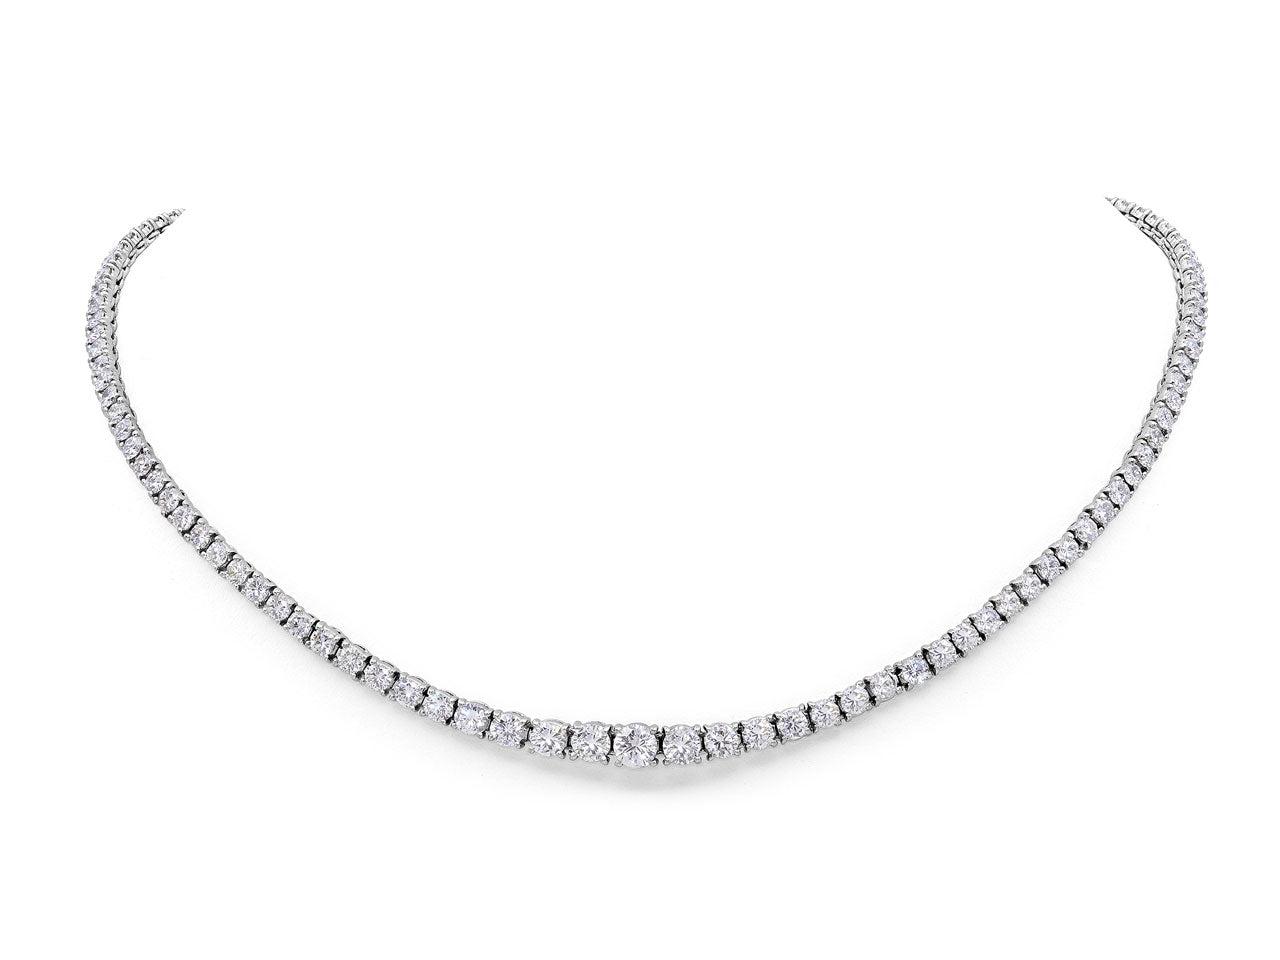 Diamond Rivière Necklace in Platinum